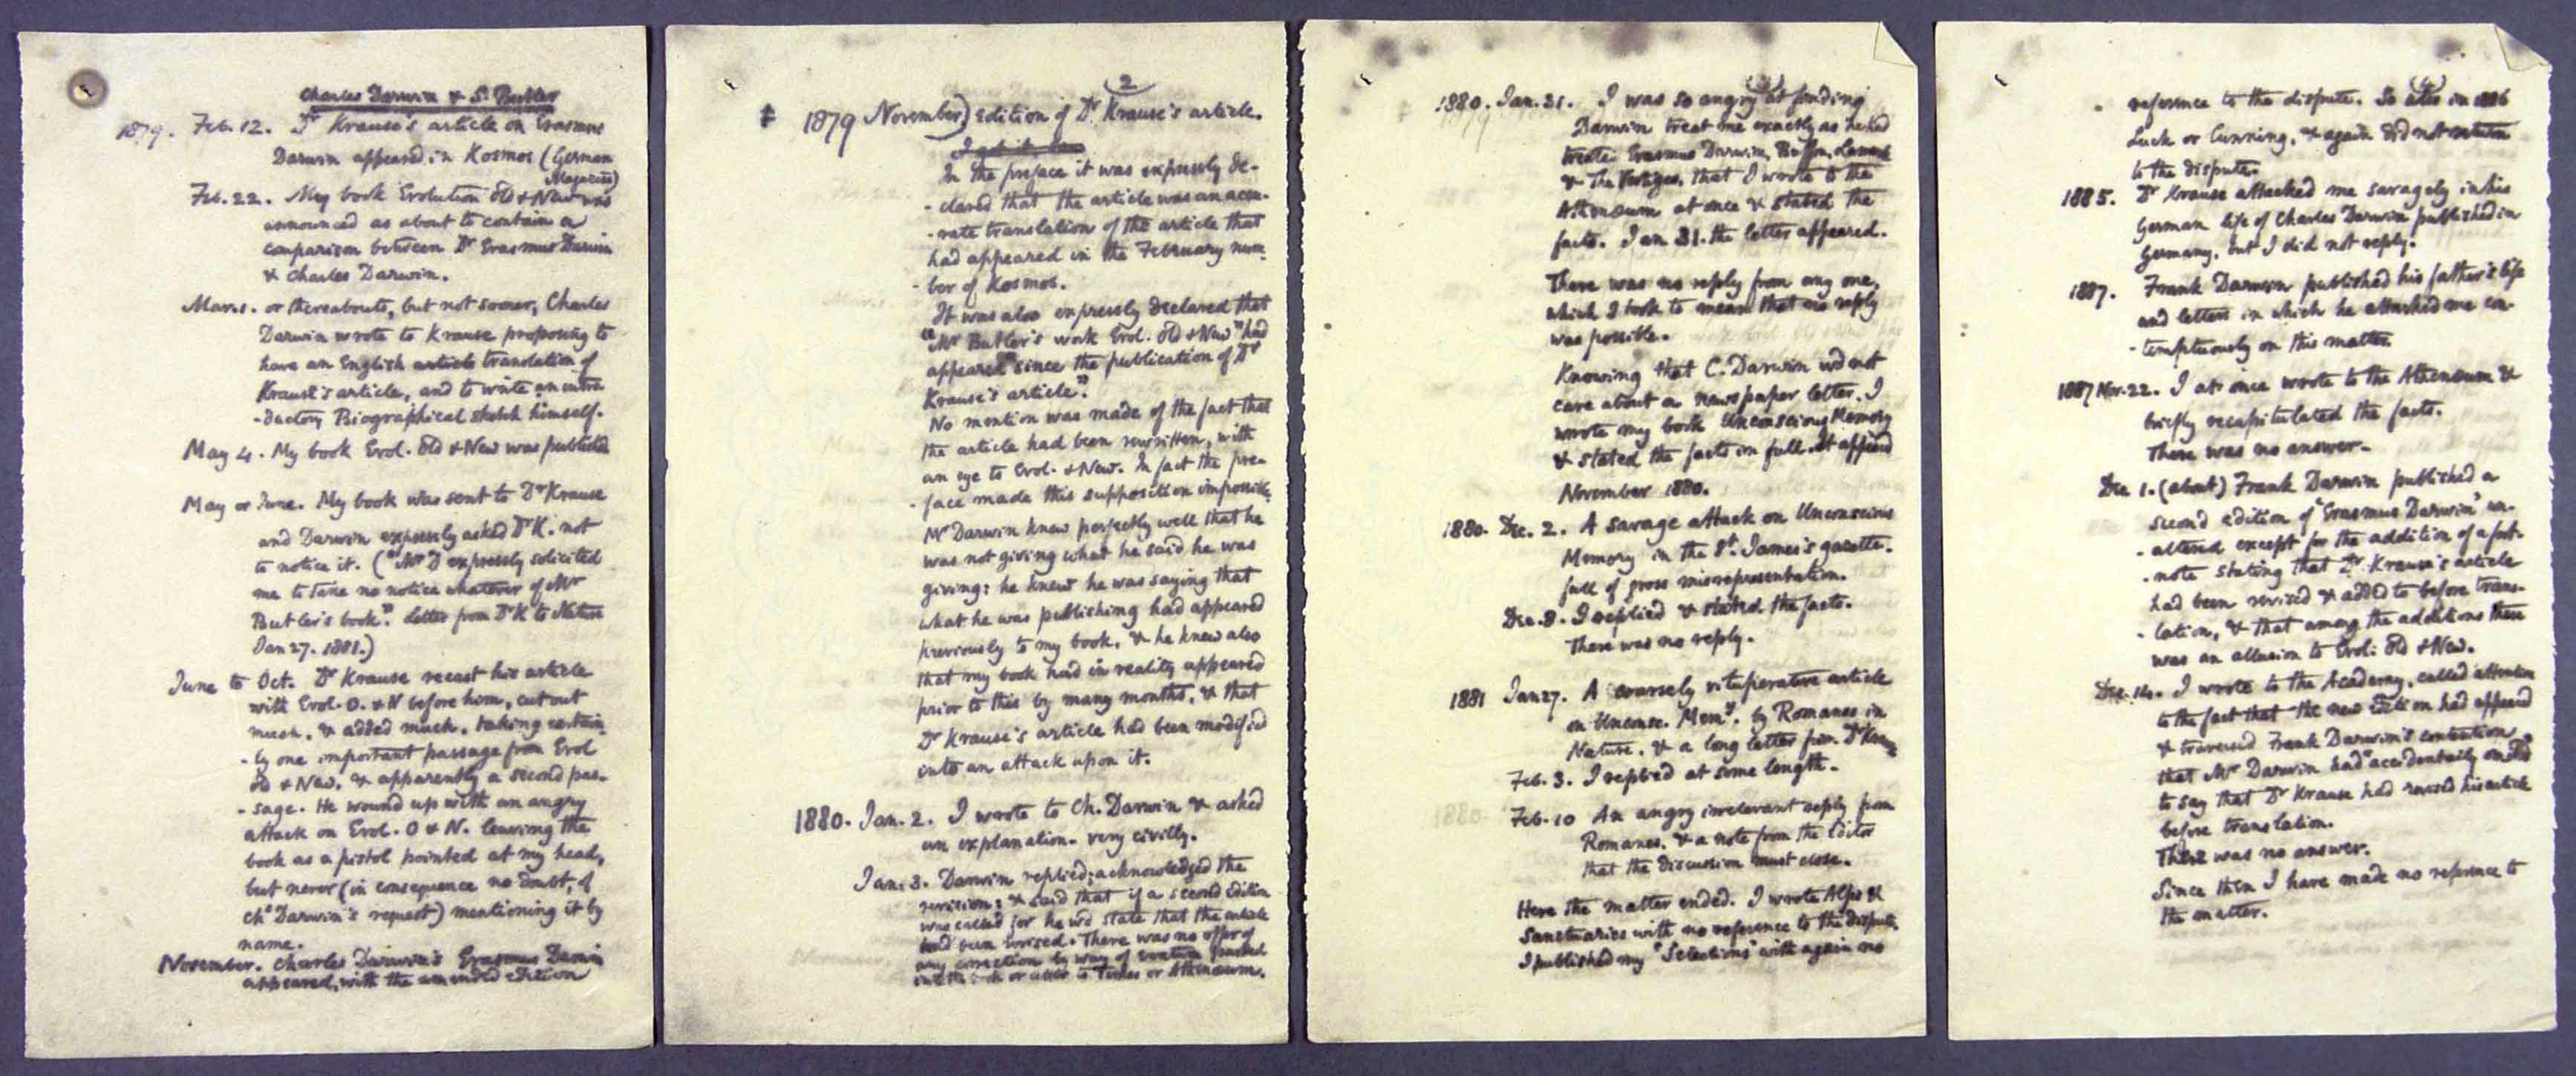 Pressed copy of manuscript notes